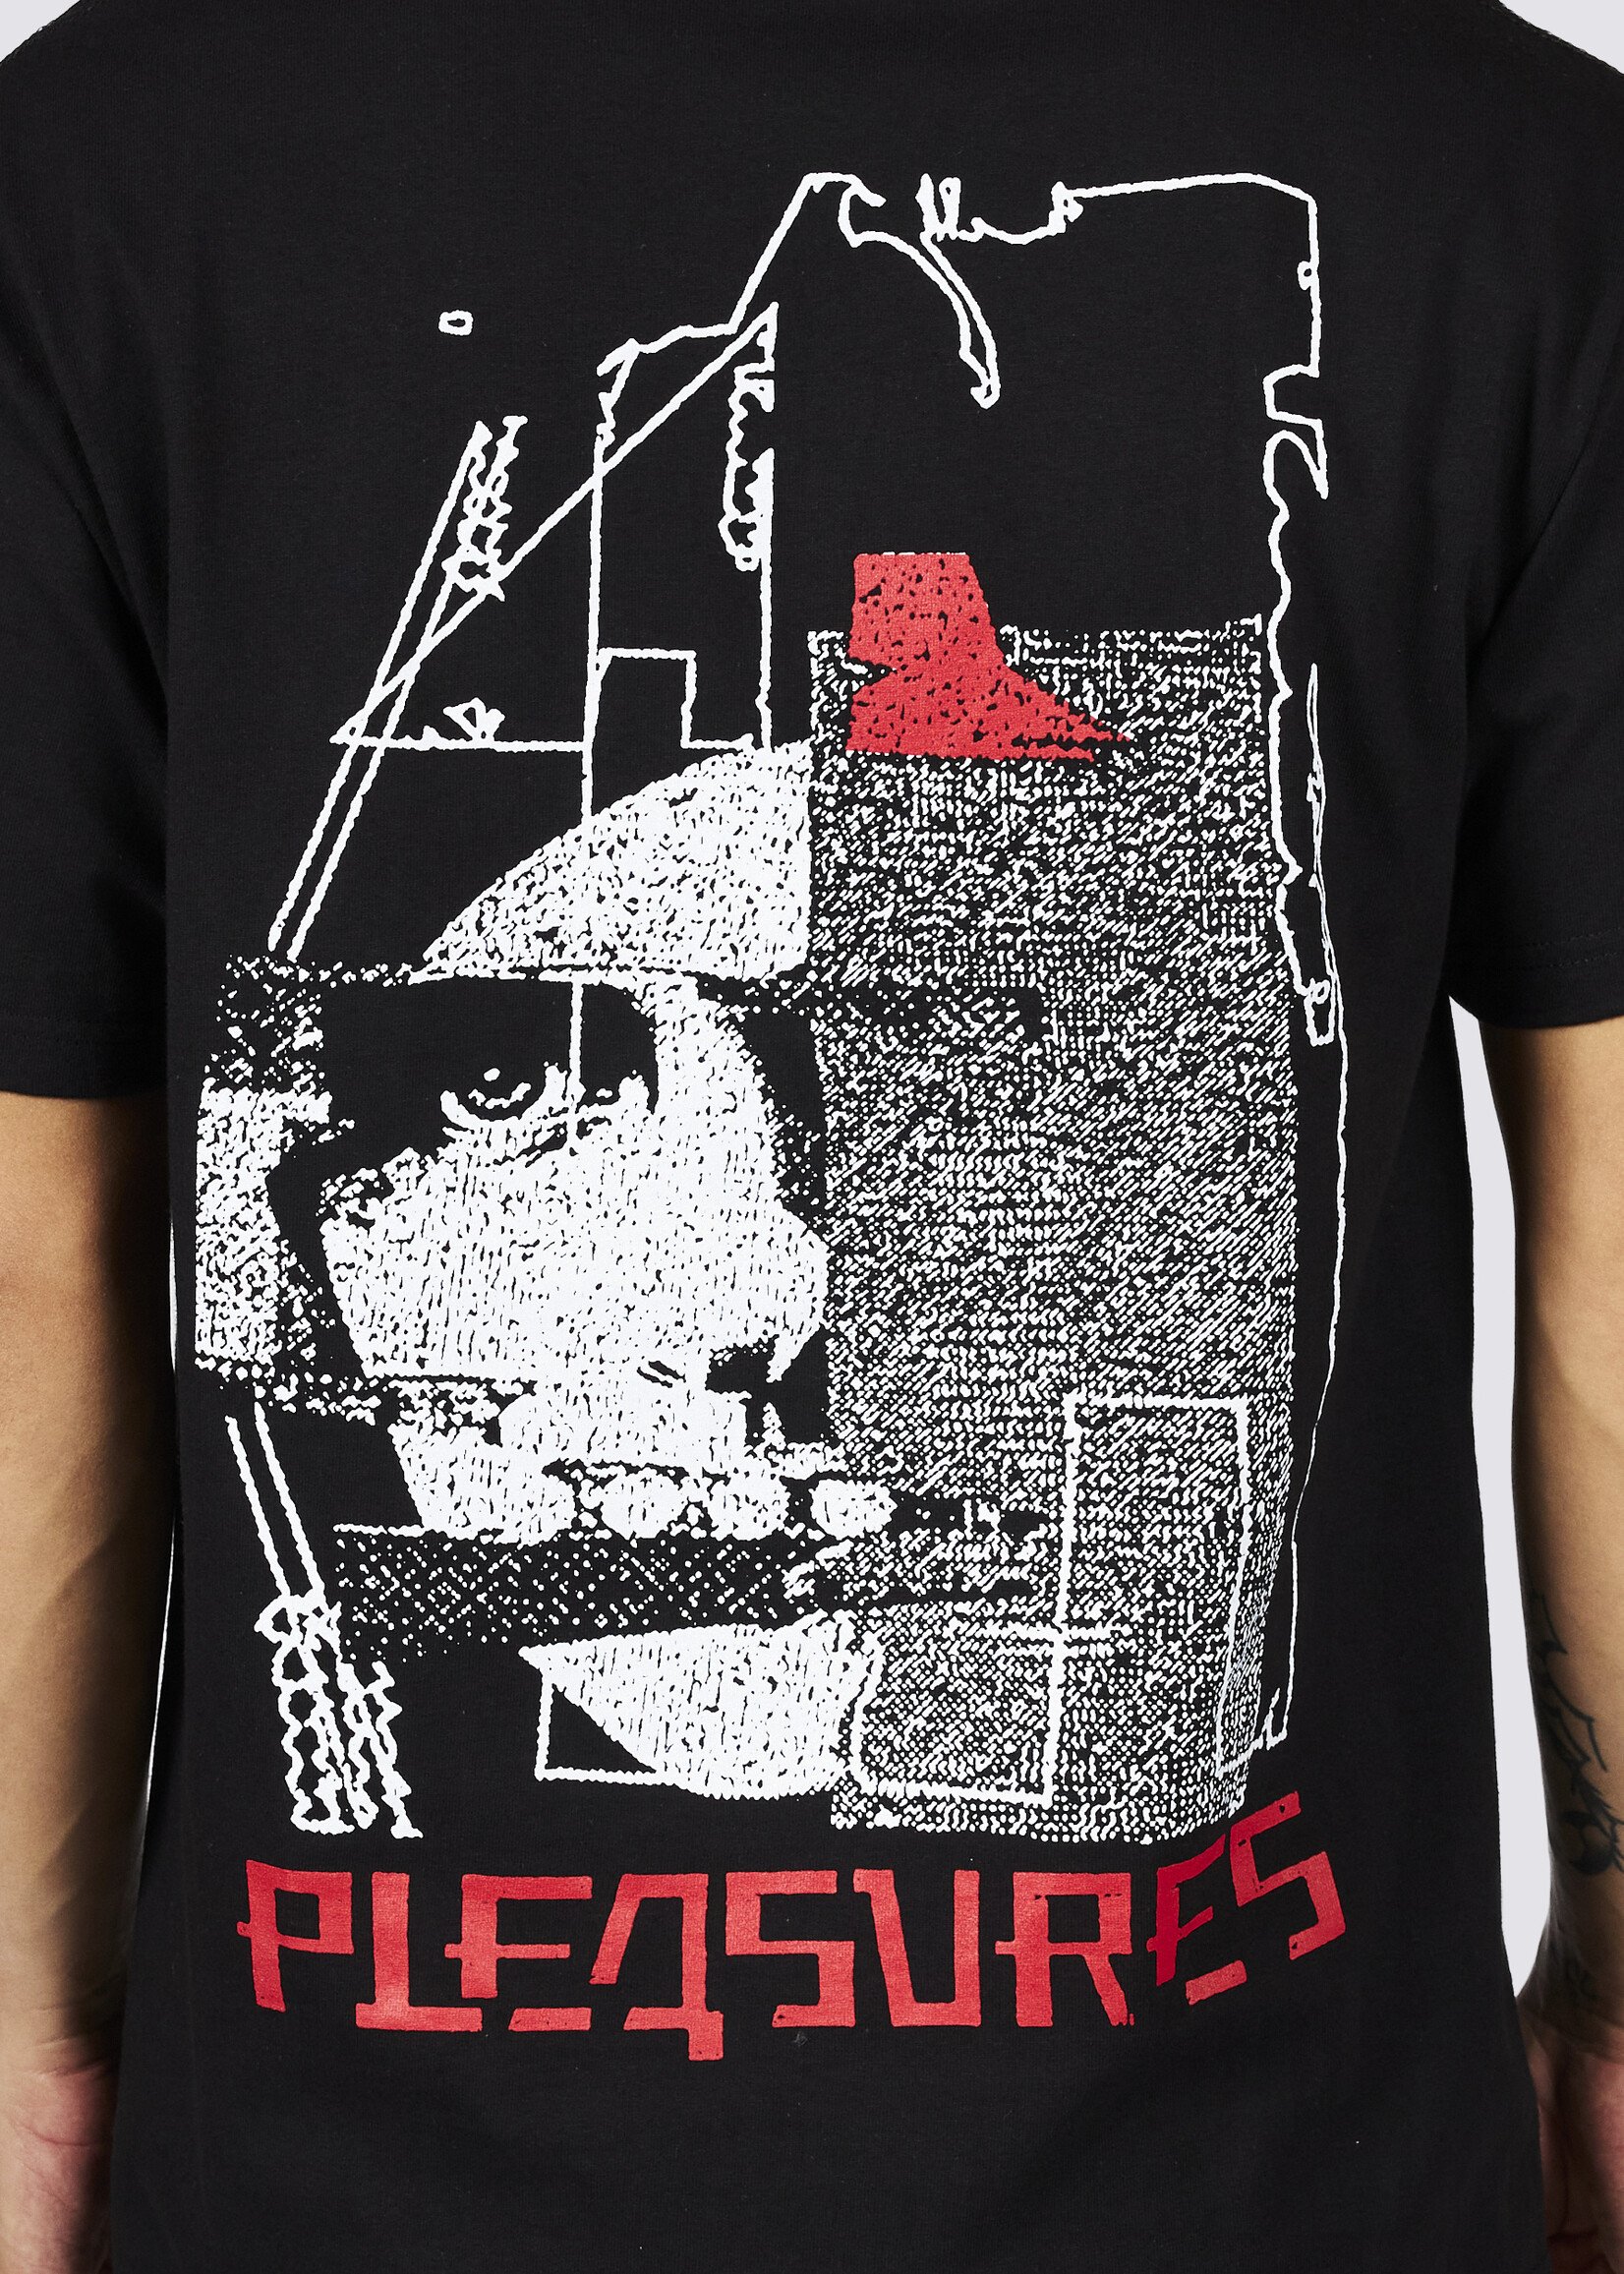 PLEASURES PLEASURES X THE FAINT Logic T-shirt in Black